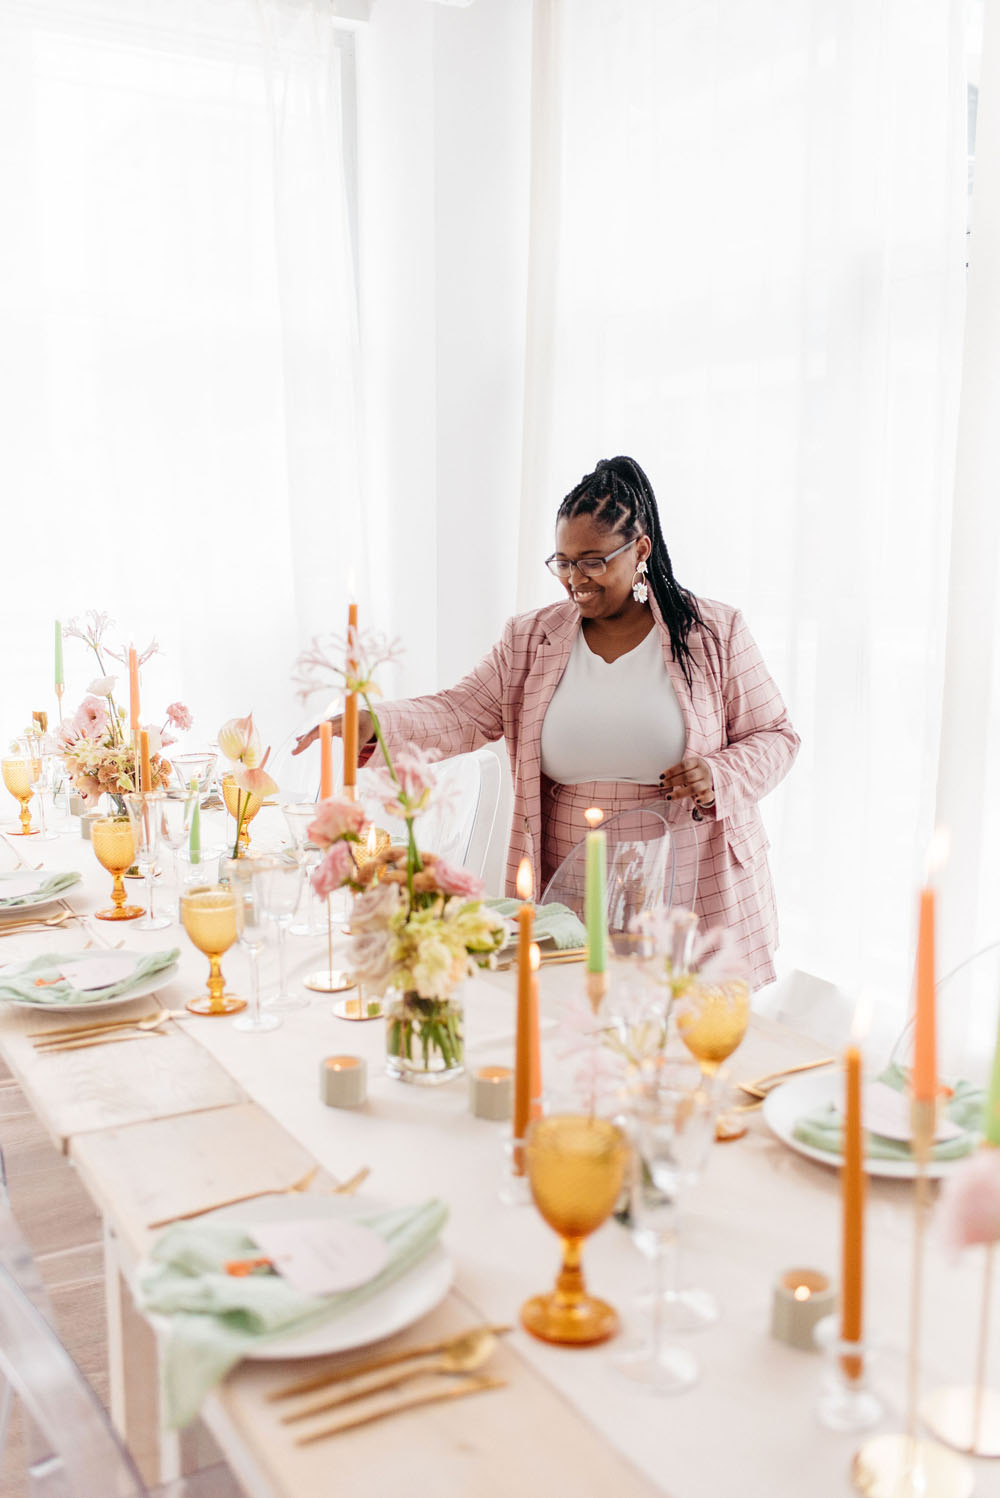 Peach wedding inspiration + vendor spotlight on Ebony x Ivory Events